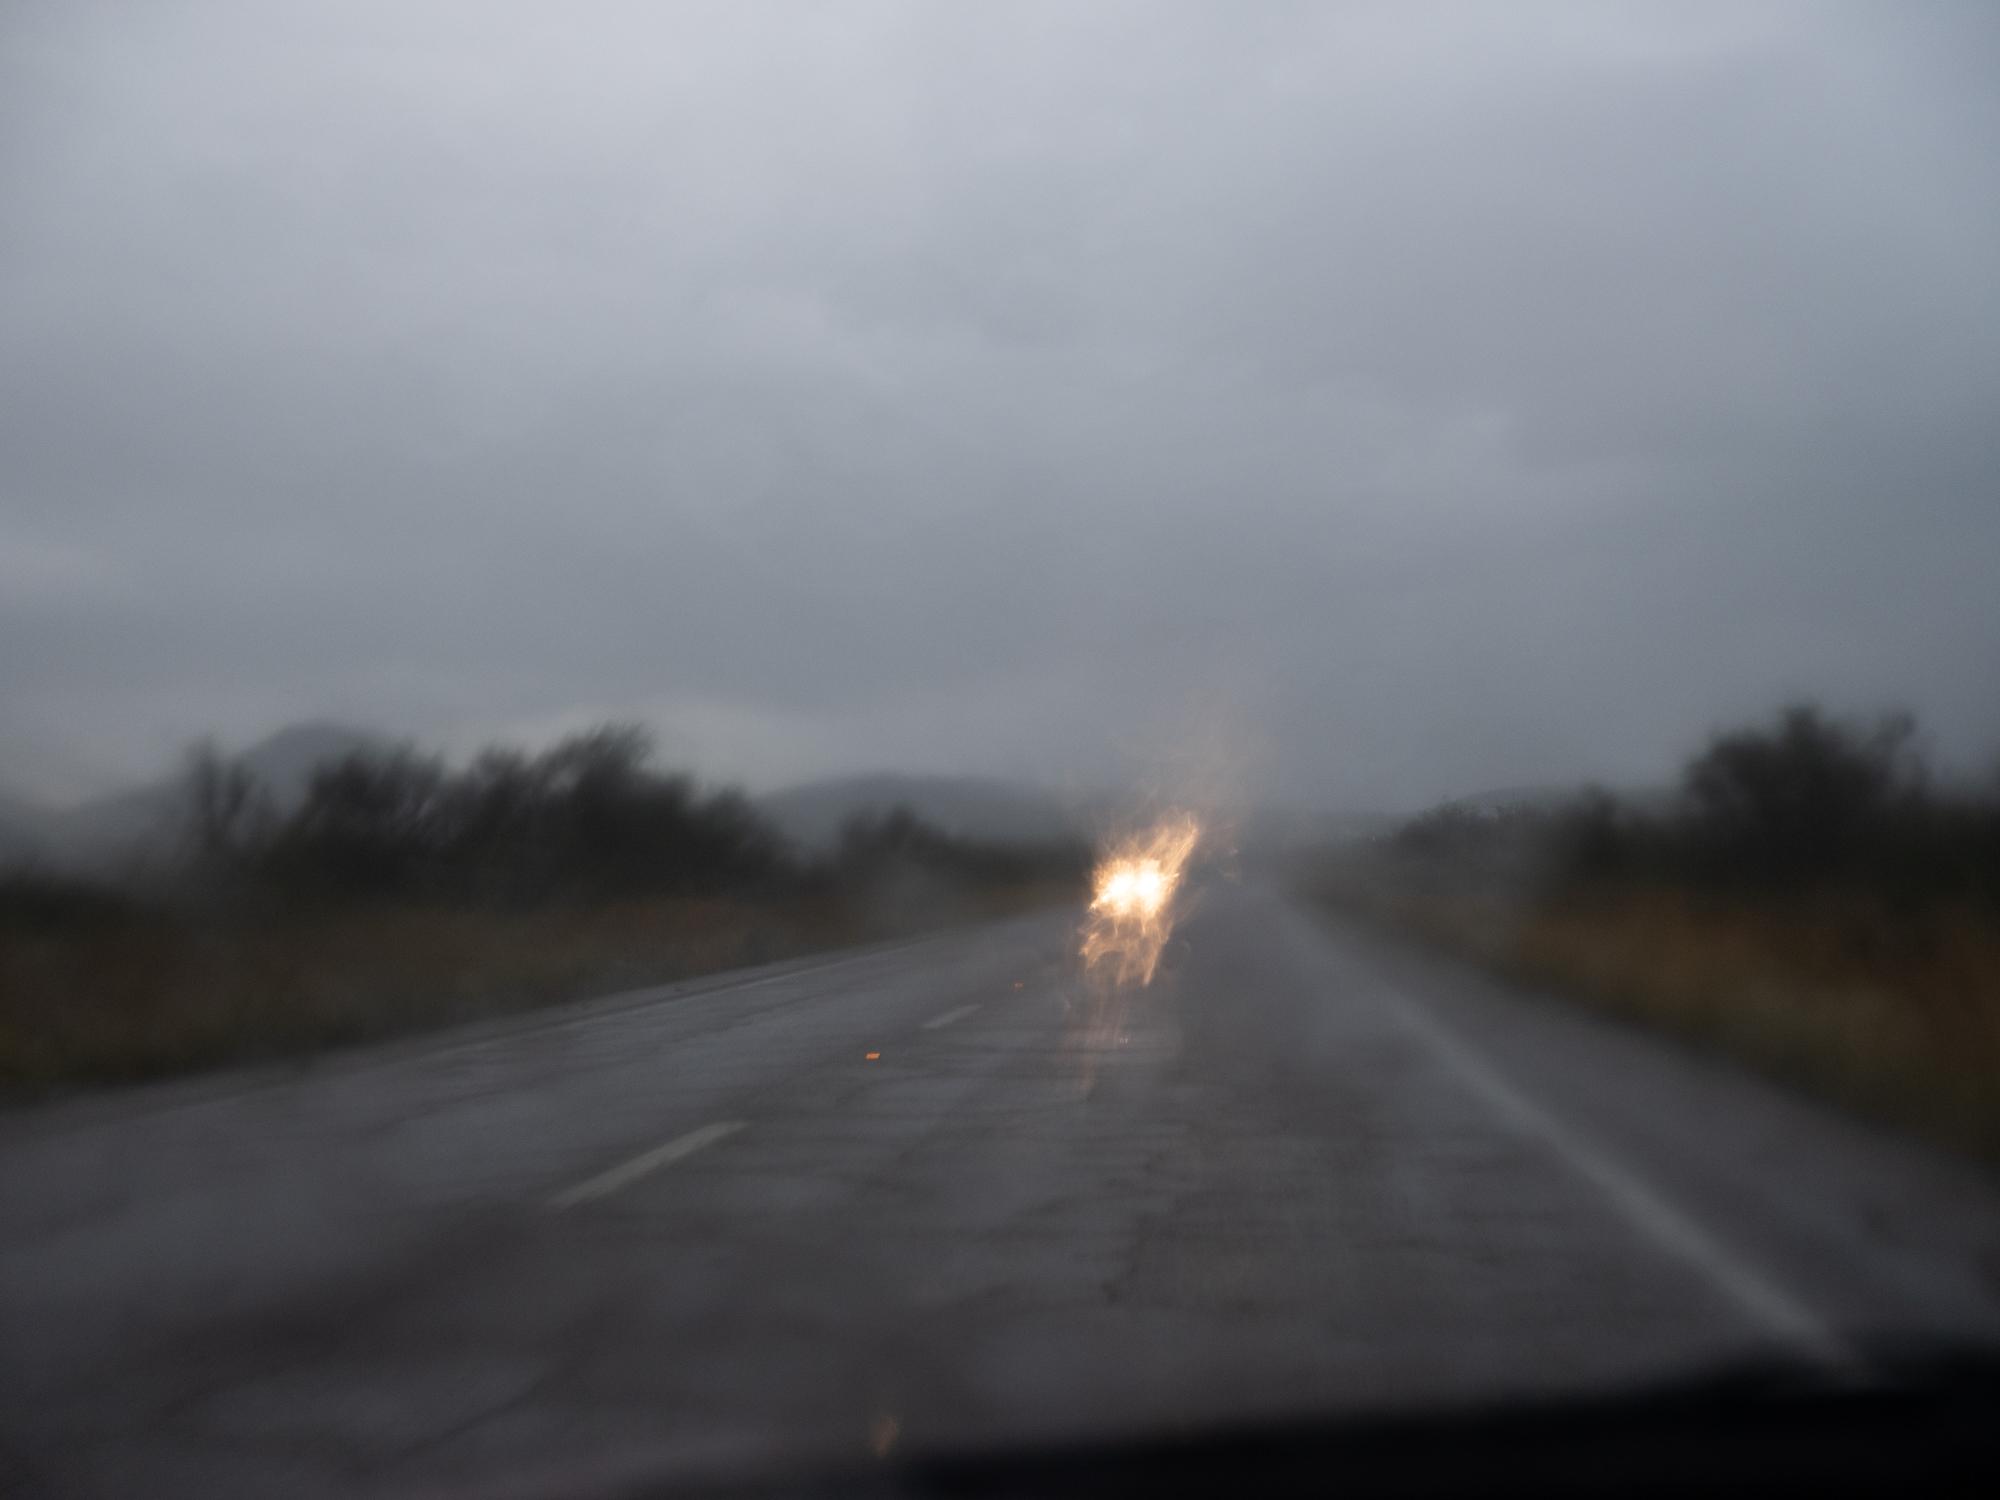 New Arizonans - HuffPost - Approaching headlights blur in the rainfall between...